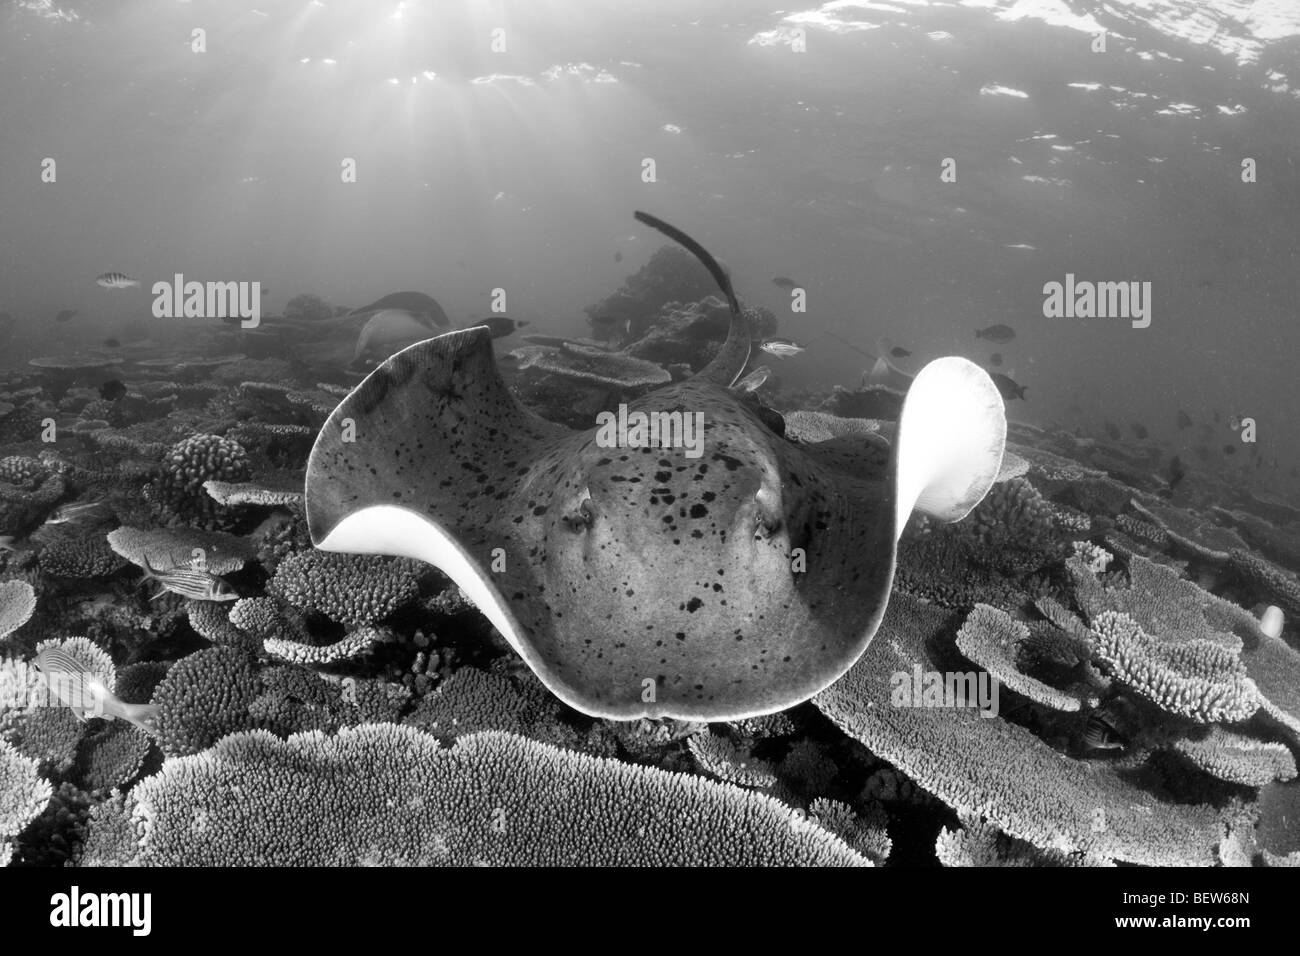 Blackspotted Stingray, Taeniura meyeni, Ellaidhoo House Reef, North Ari Atoll, Maldives Stock Photo